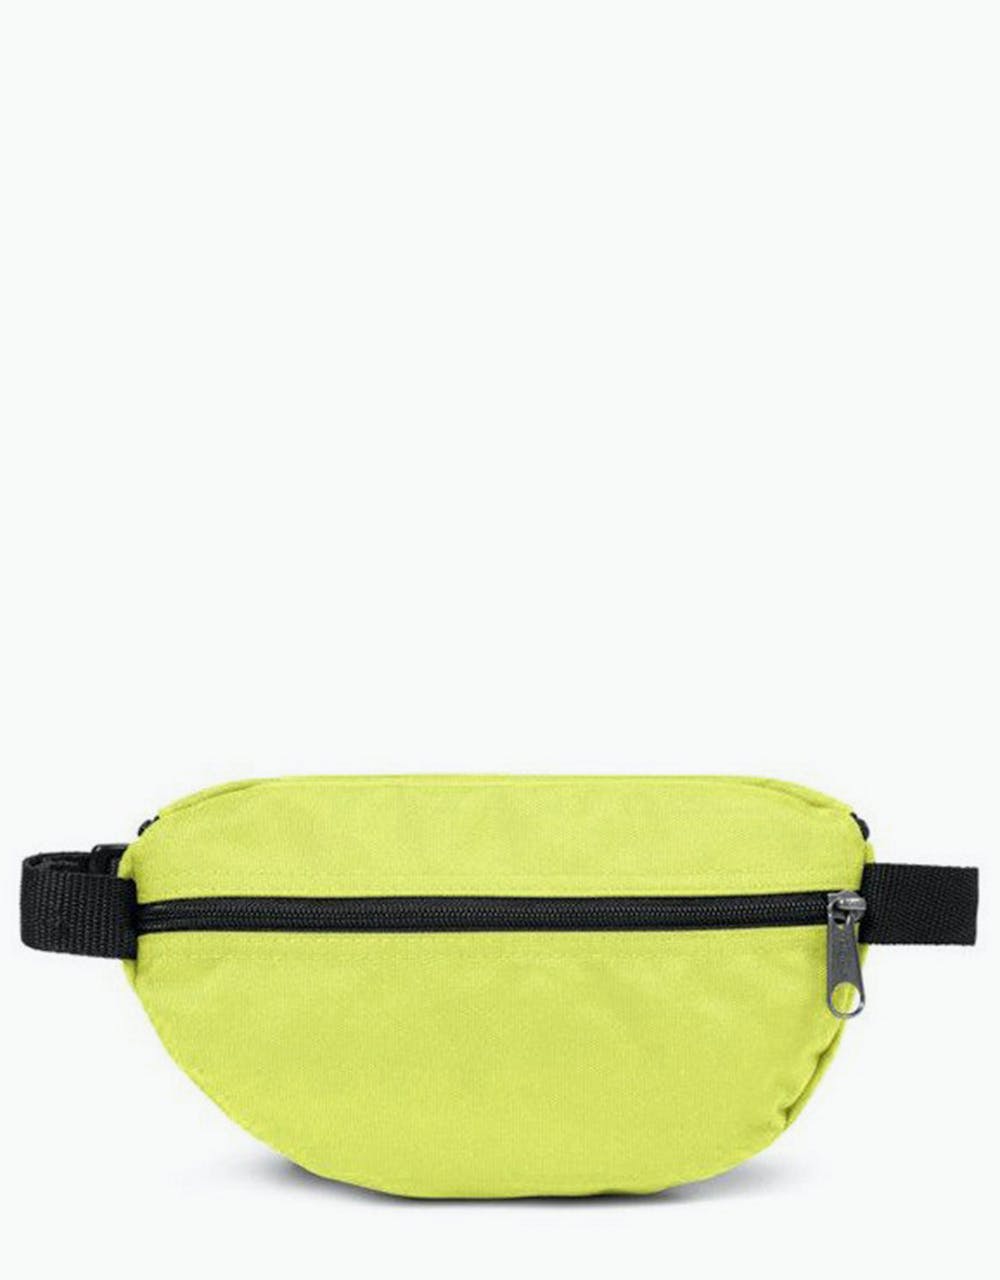 Eastpak Springer Cross Body Bag - Beachy Yellow